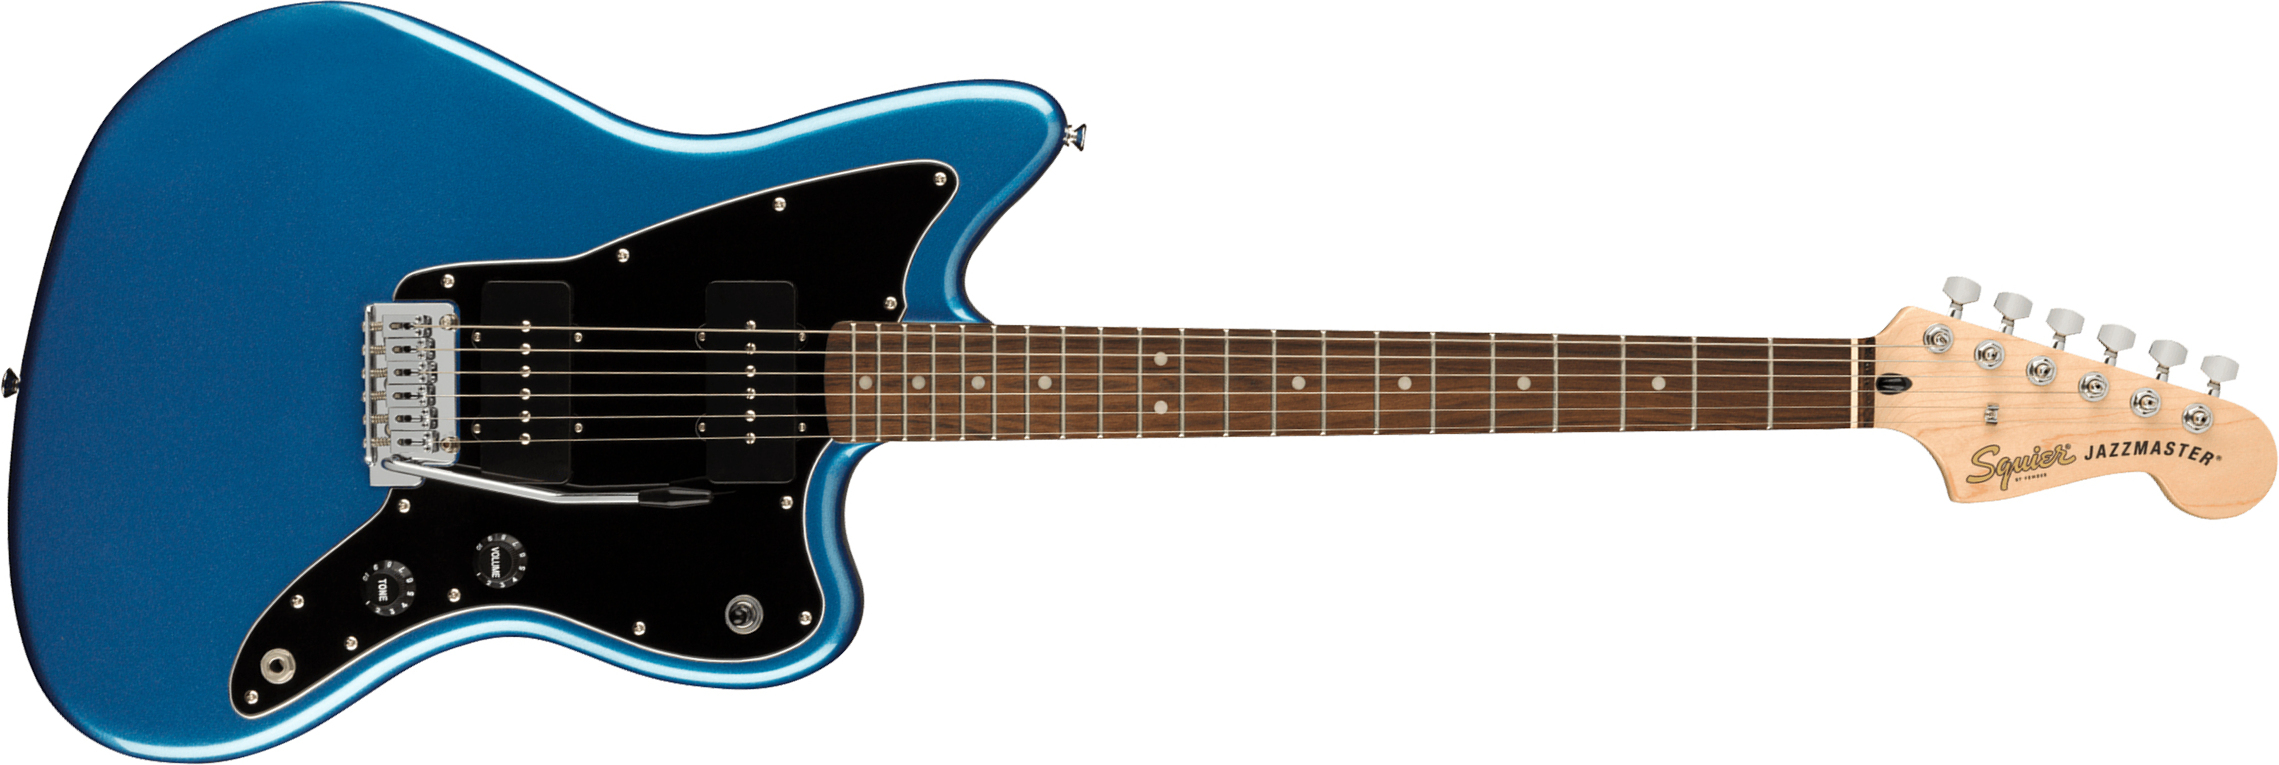 Squier Jazzmaster Affinity 2021 2s Trem Lau - Lake Placid Blue - Retro-rock elektrische gitaar - Main picture